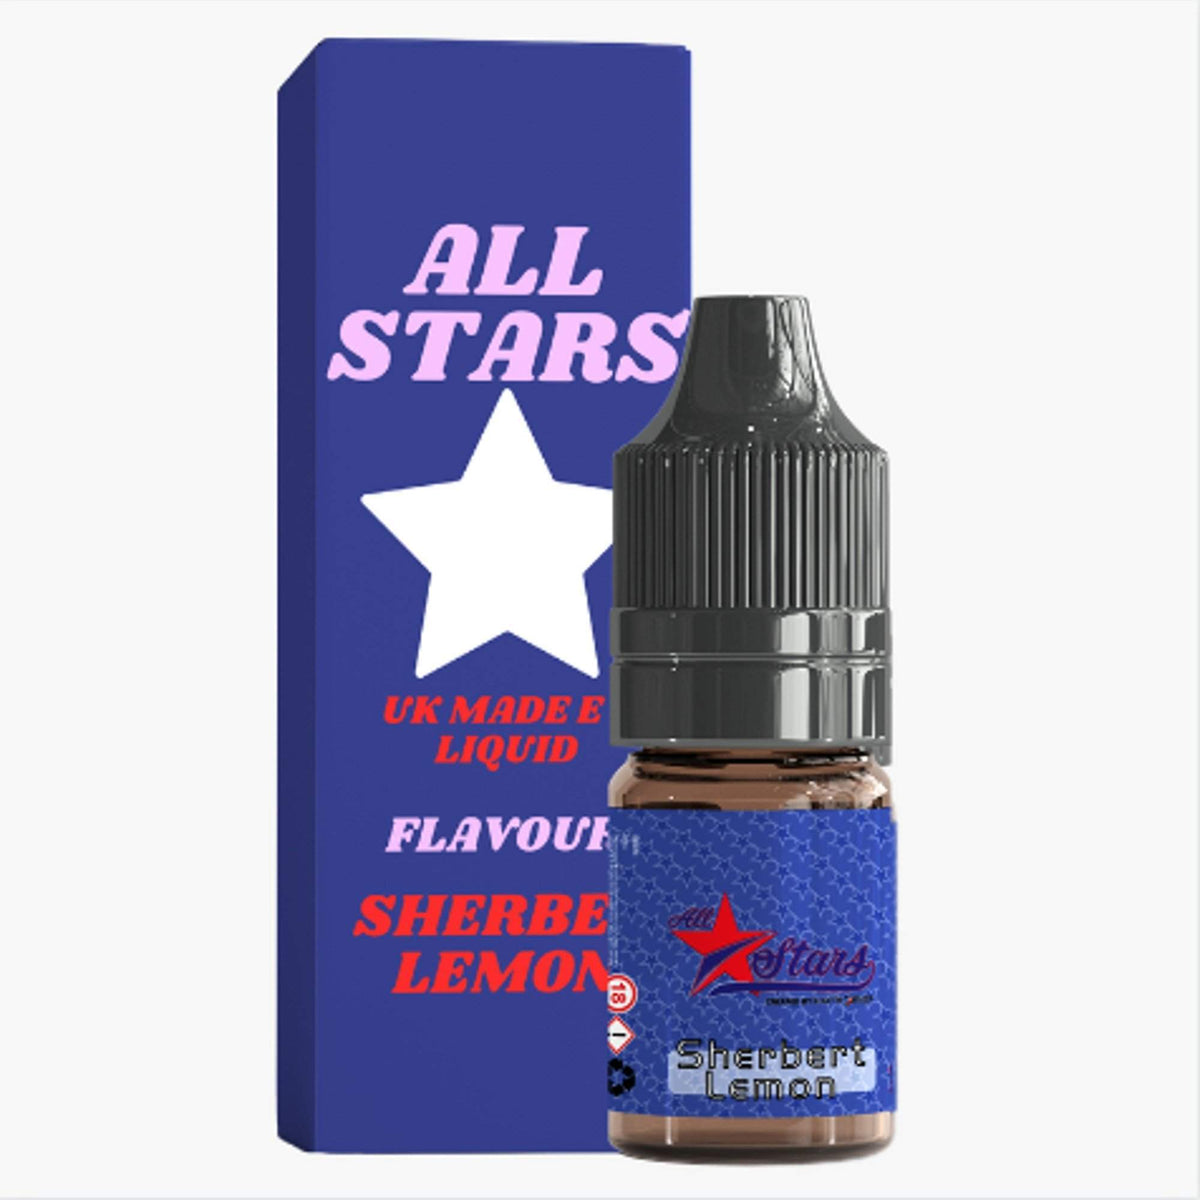 All Stars - Sherbet Lemon E-Liquid Flavour 10ml-All Stars-10ml,12mg,50/50,6mg